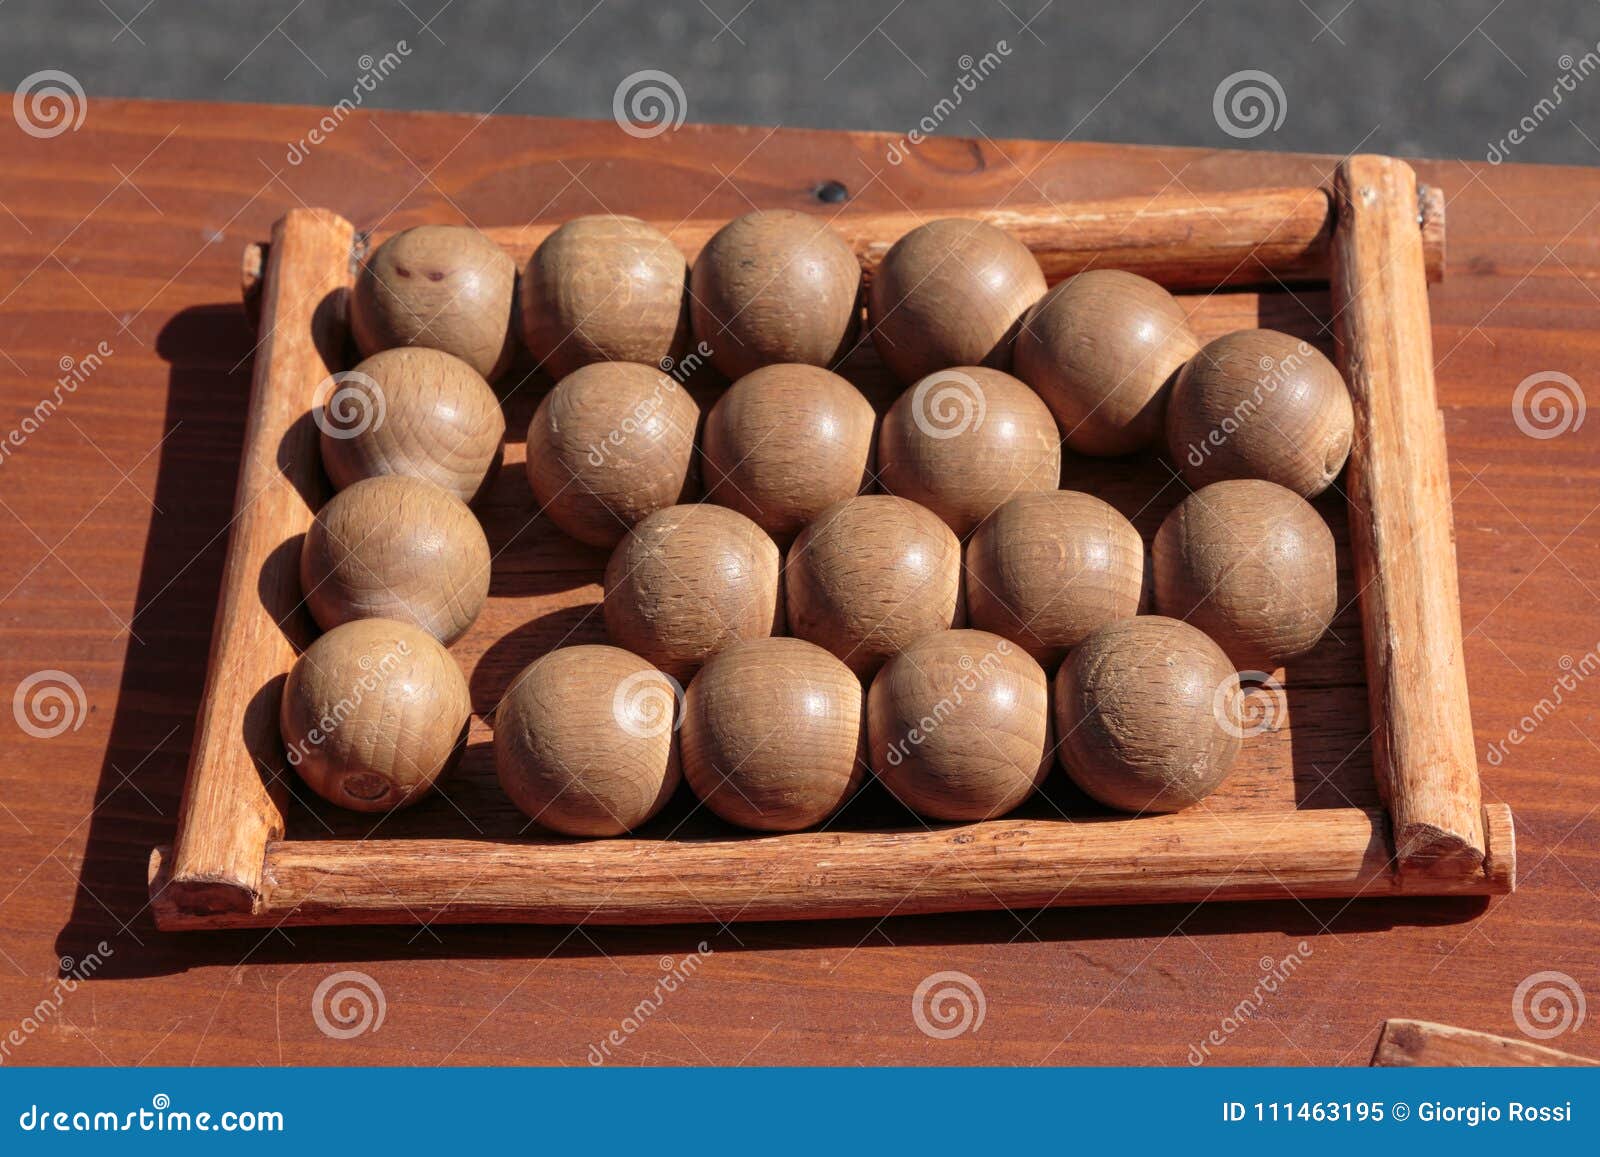 Juegos de bola de madera de capturas Taza Juego de Pelota Mini bola en juego Juguete De Madera Taza mano e A7Y1